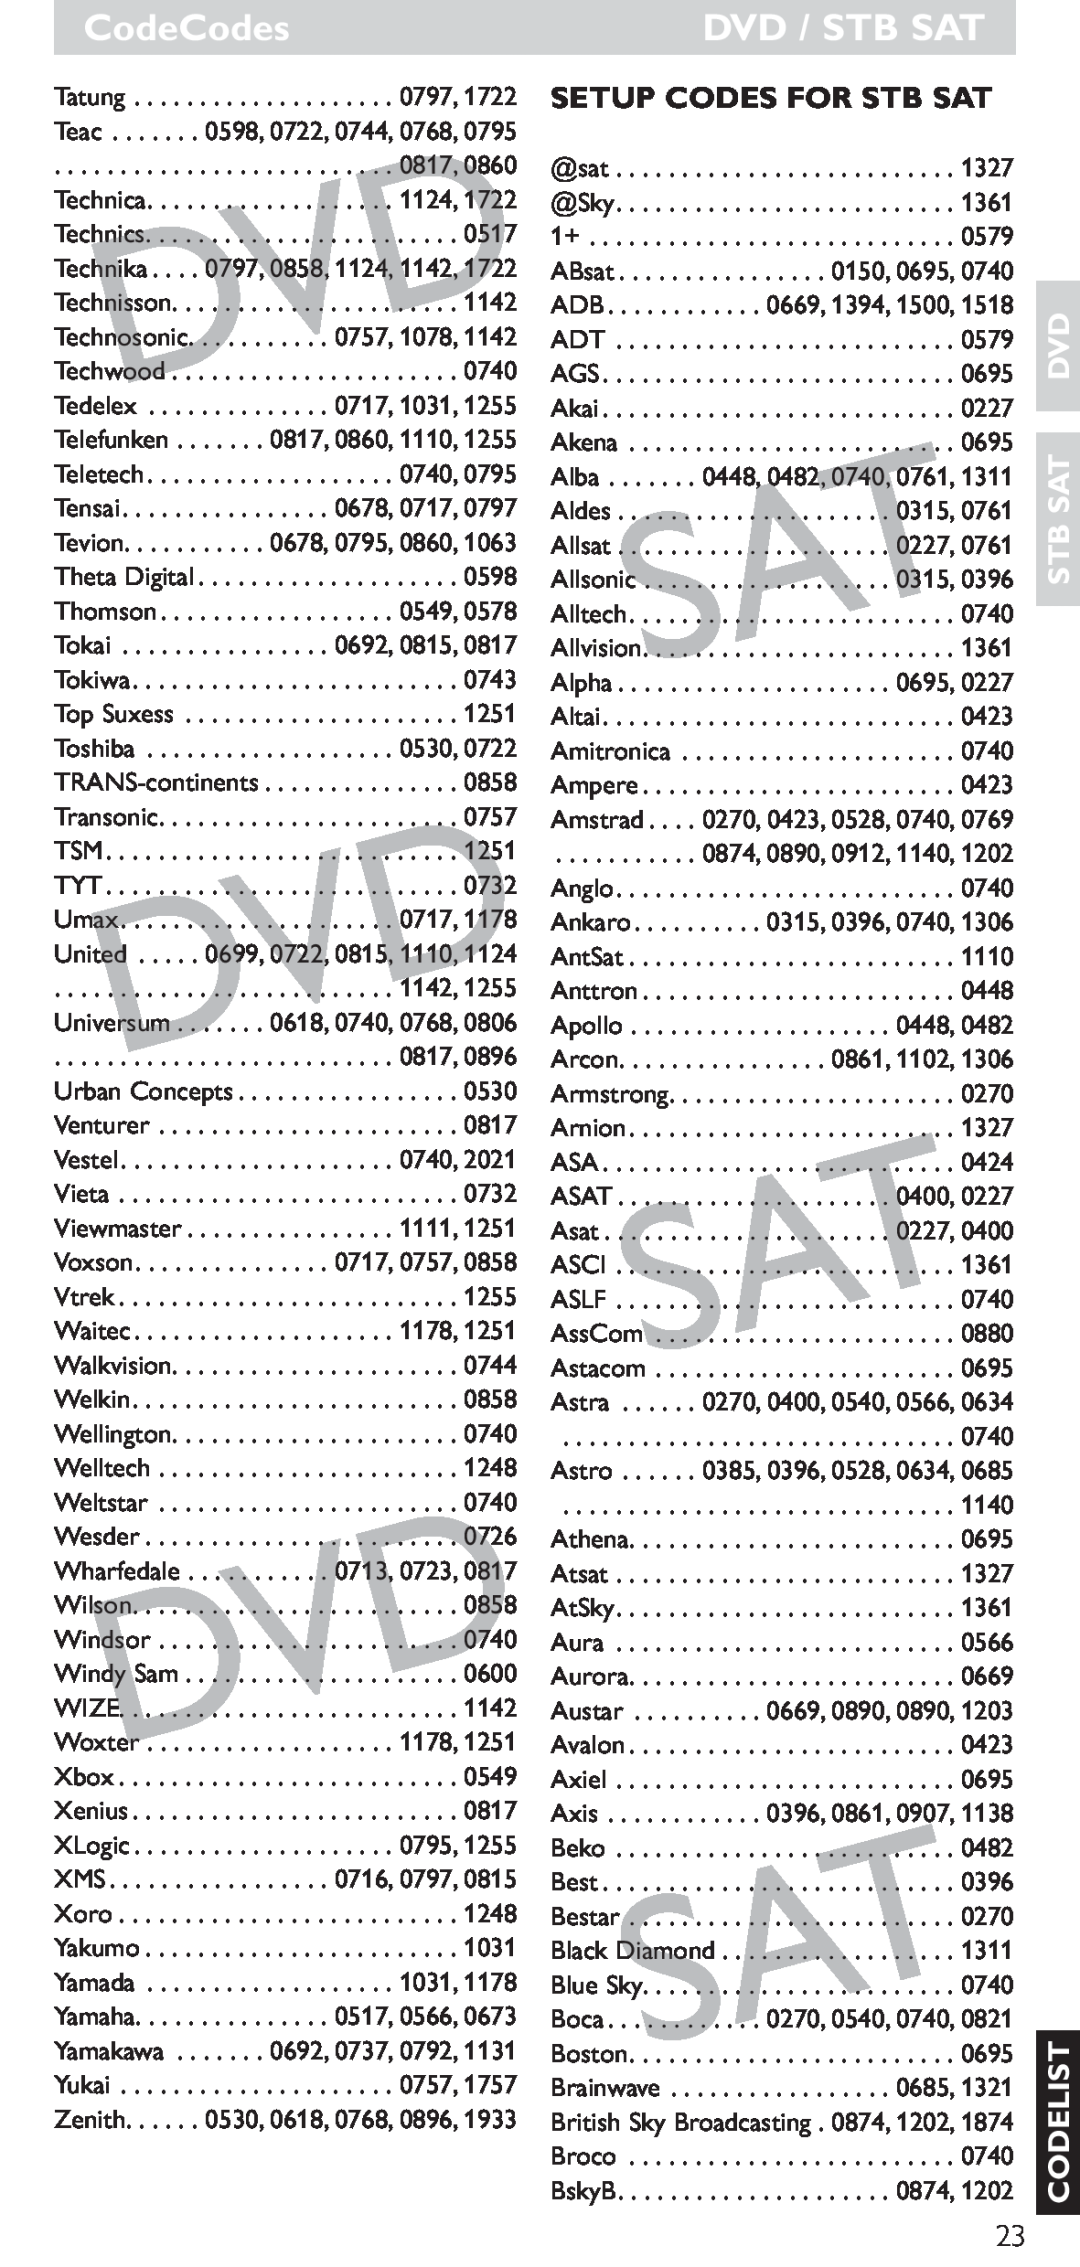 Hitachi SRU 5040/05 manual CodeCodes, Dvd / Stb Sat, Setup Codes For Stb Sat, Stb Sat Dvd Codelist 